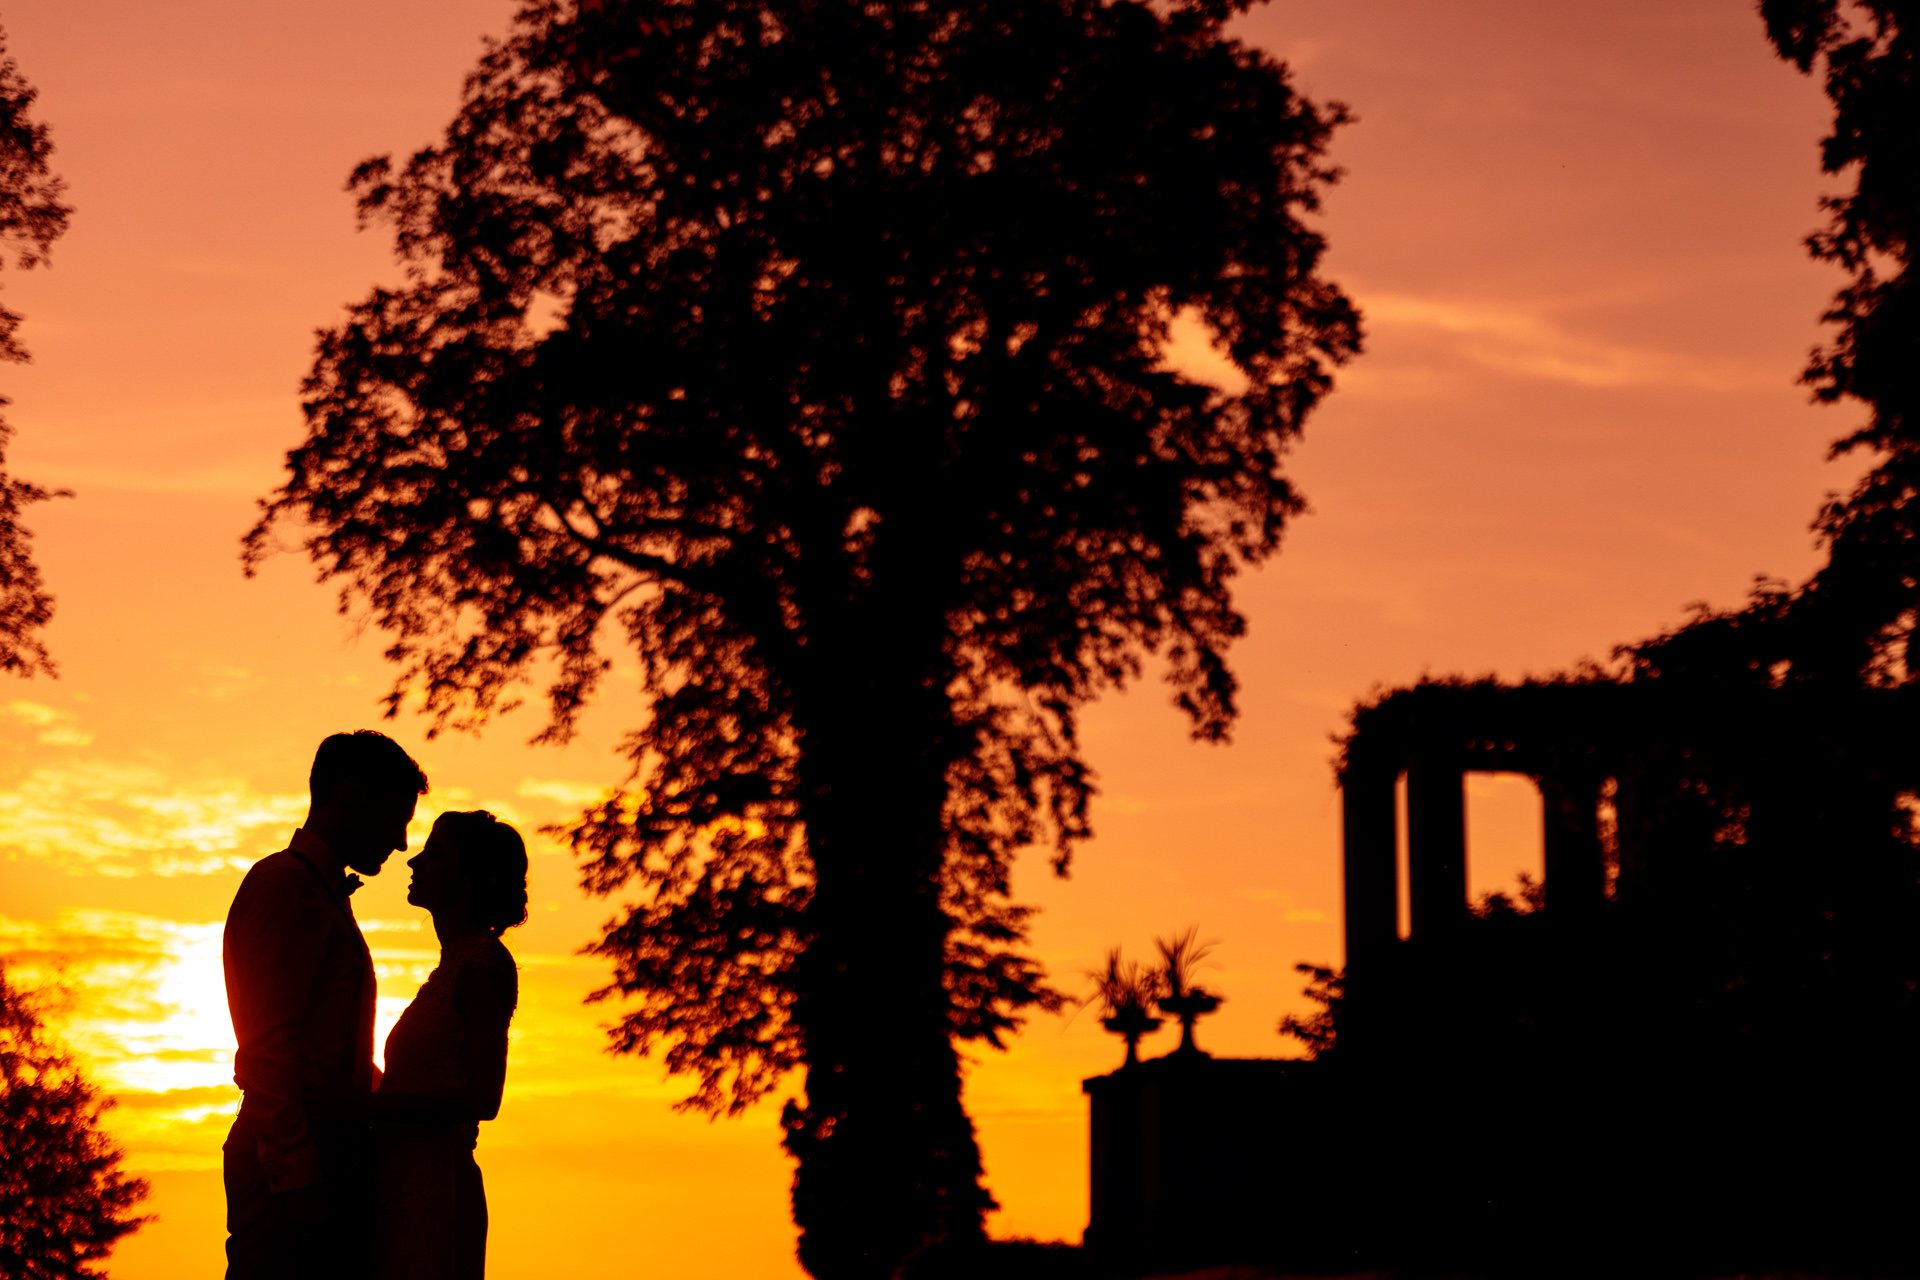 Wedding photographer Potsdam Berlin photographs couple in golden hour at lake